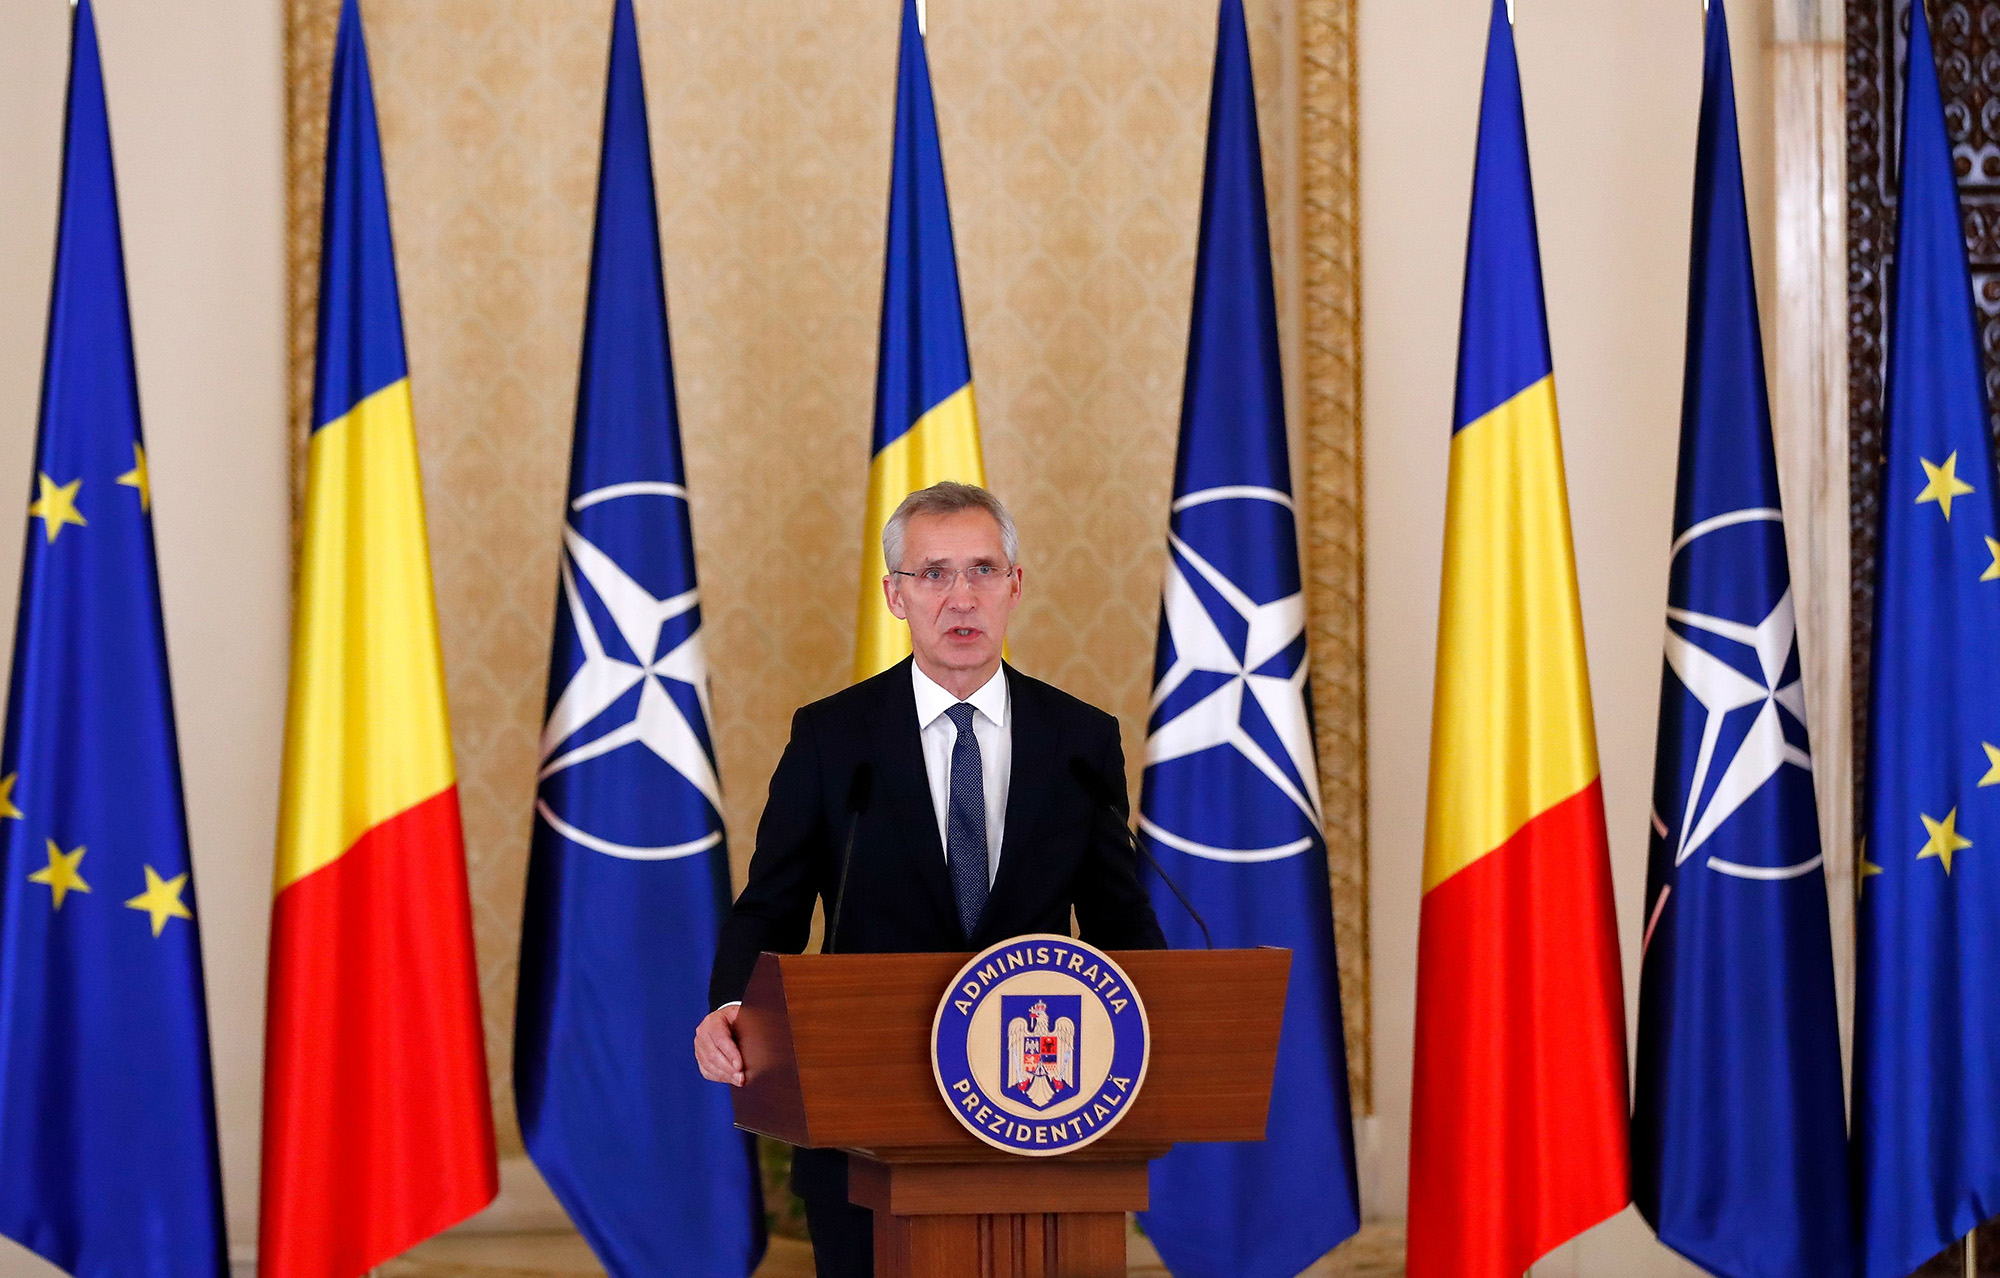 NATO will continue "critical" and unprecedented support of Ukraine, alliance chief says